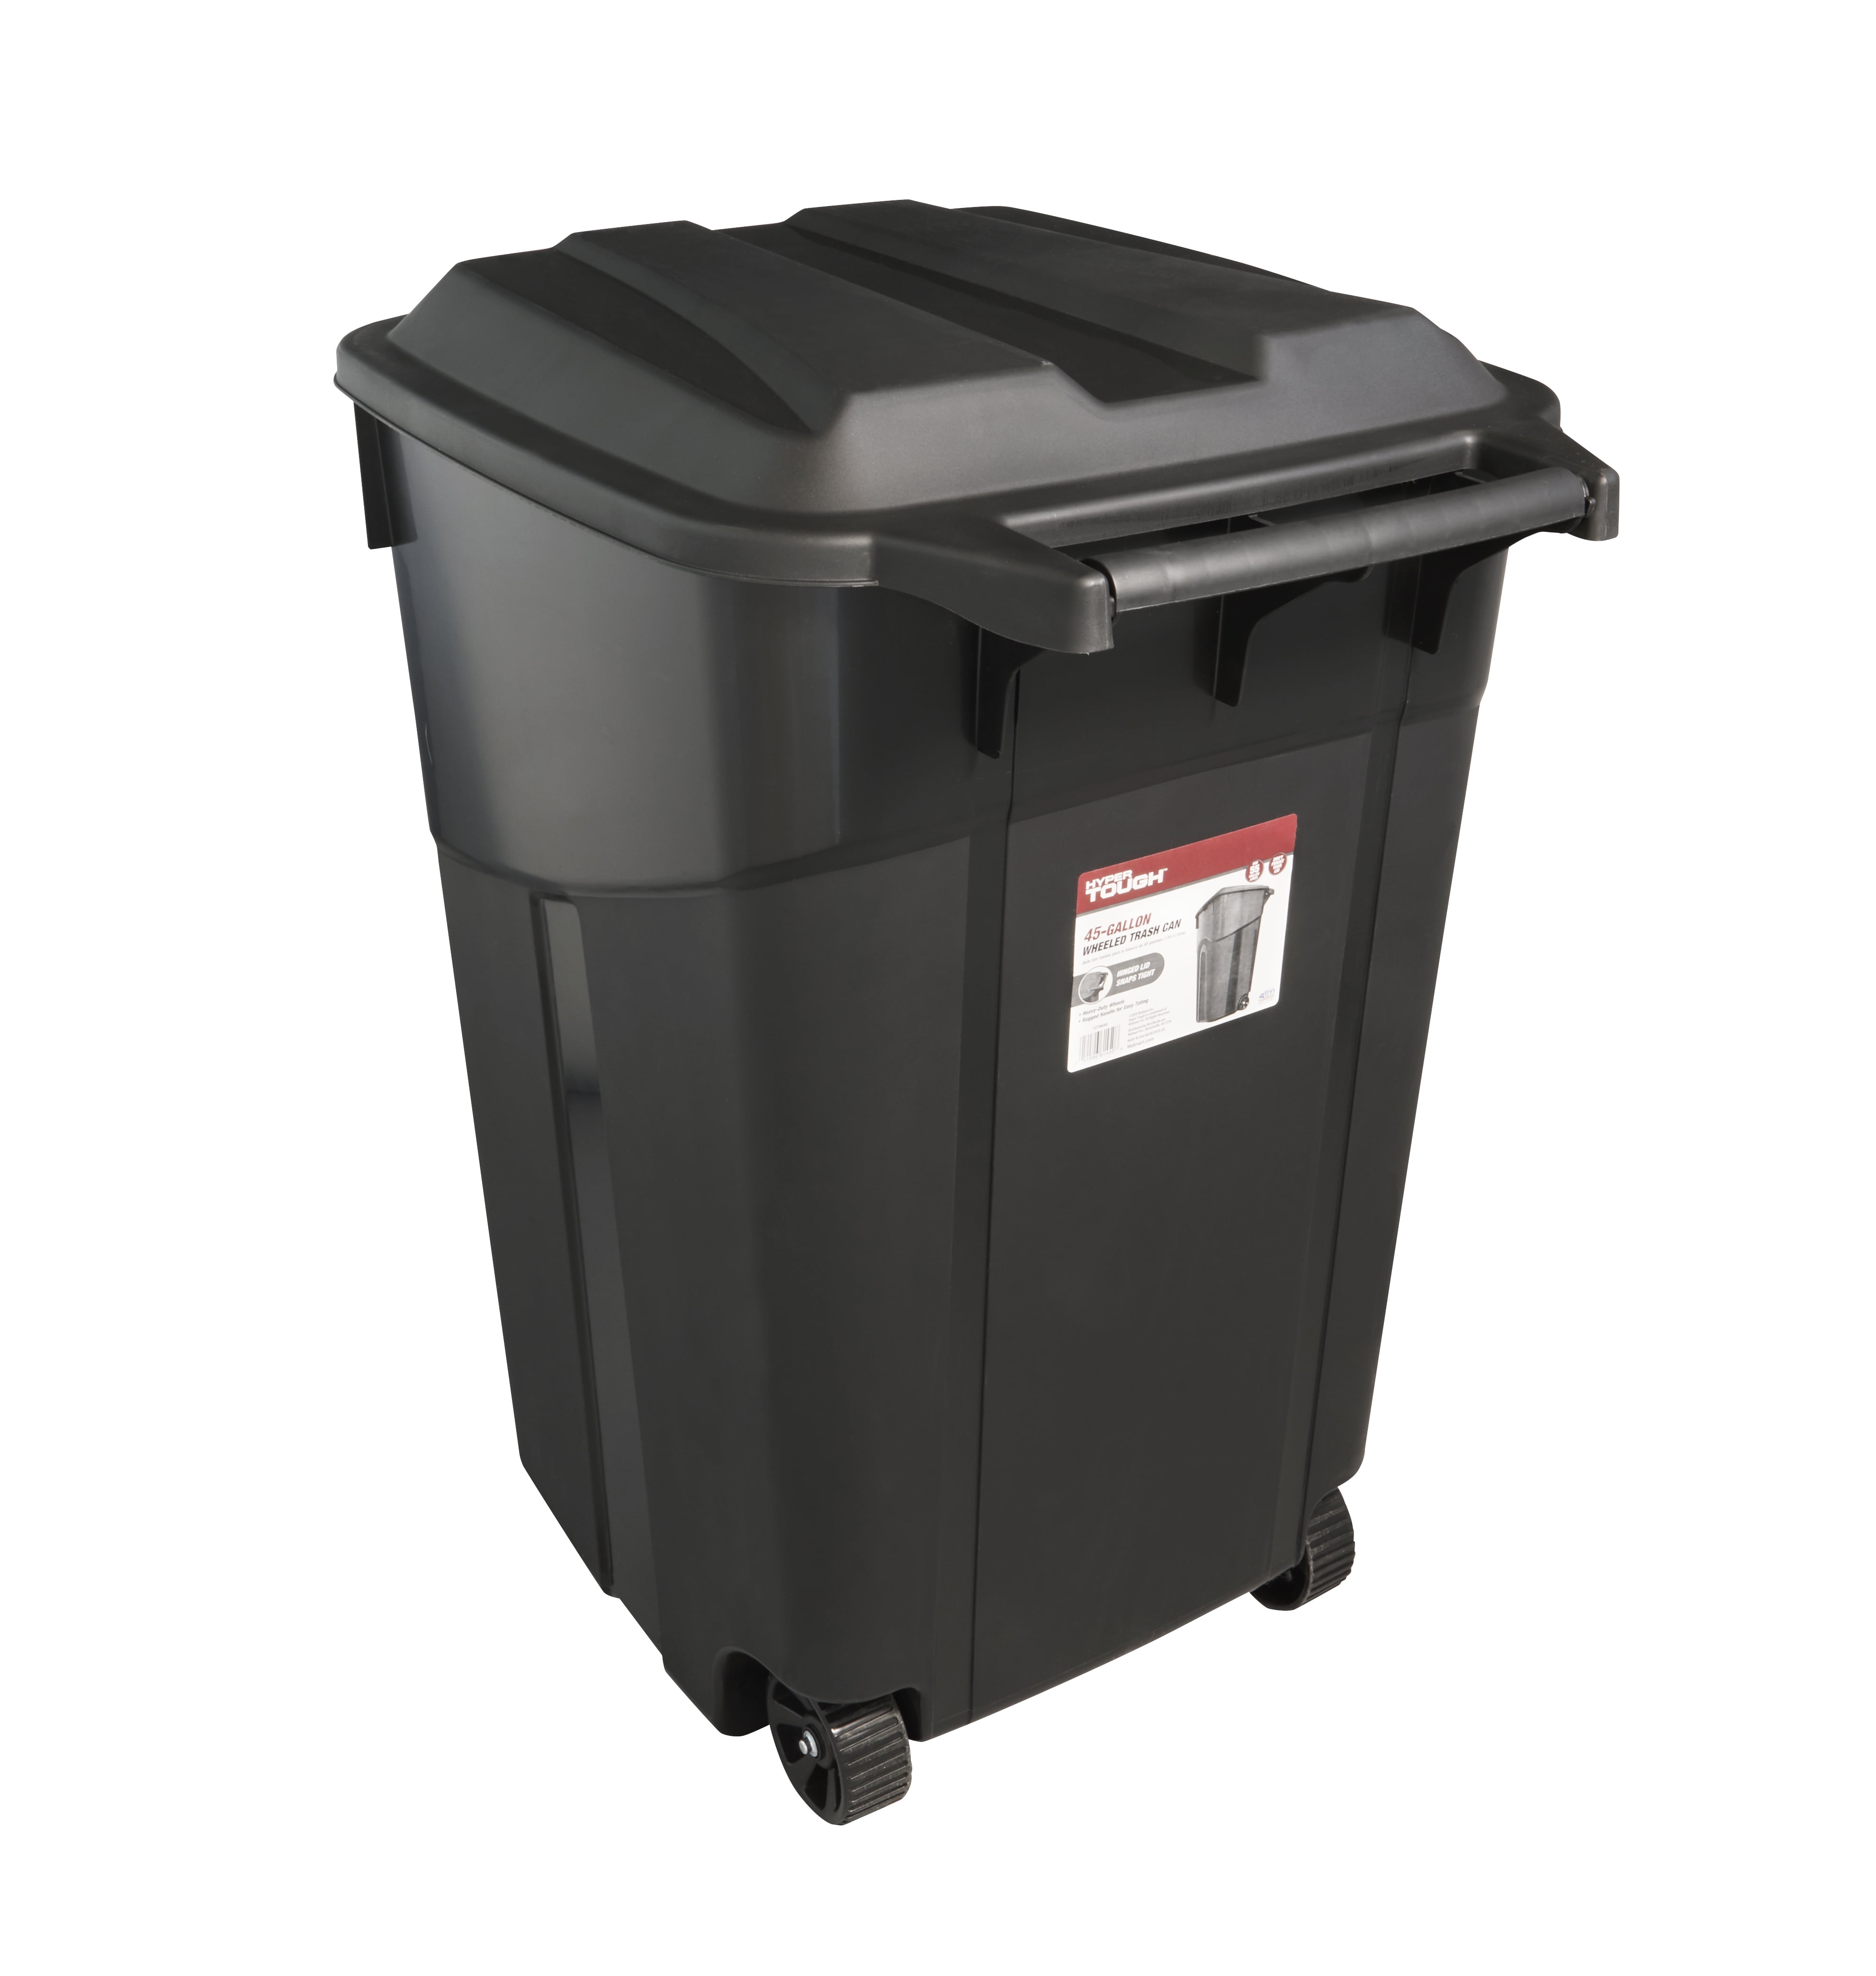 Black Wheeled Garbage Bin Rubbermaid Roughneck Trash Can With Lid 45 Gal 